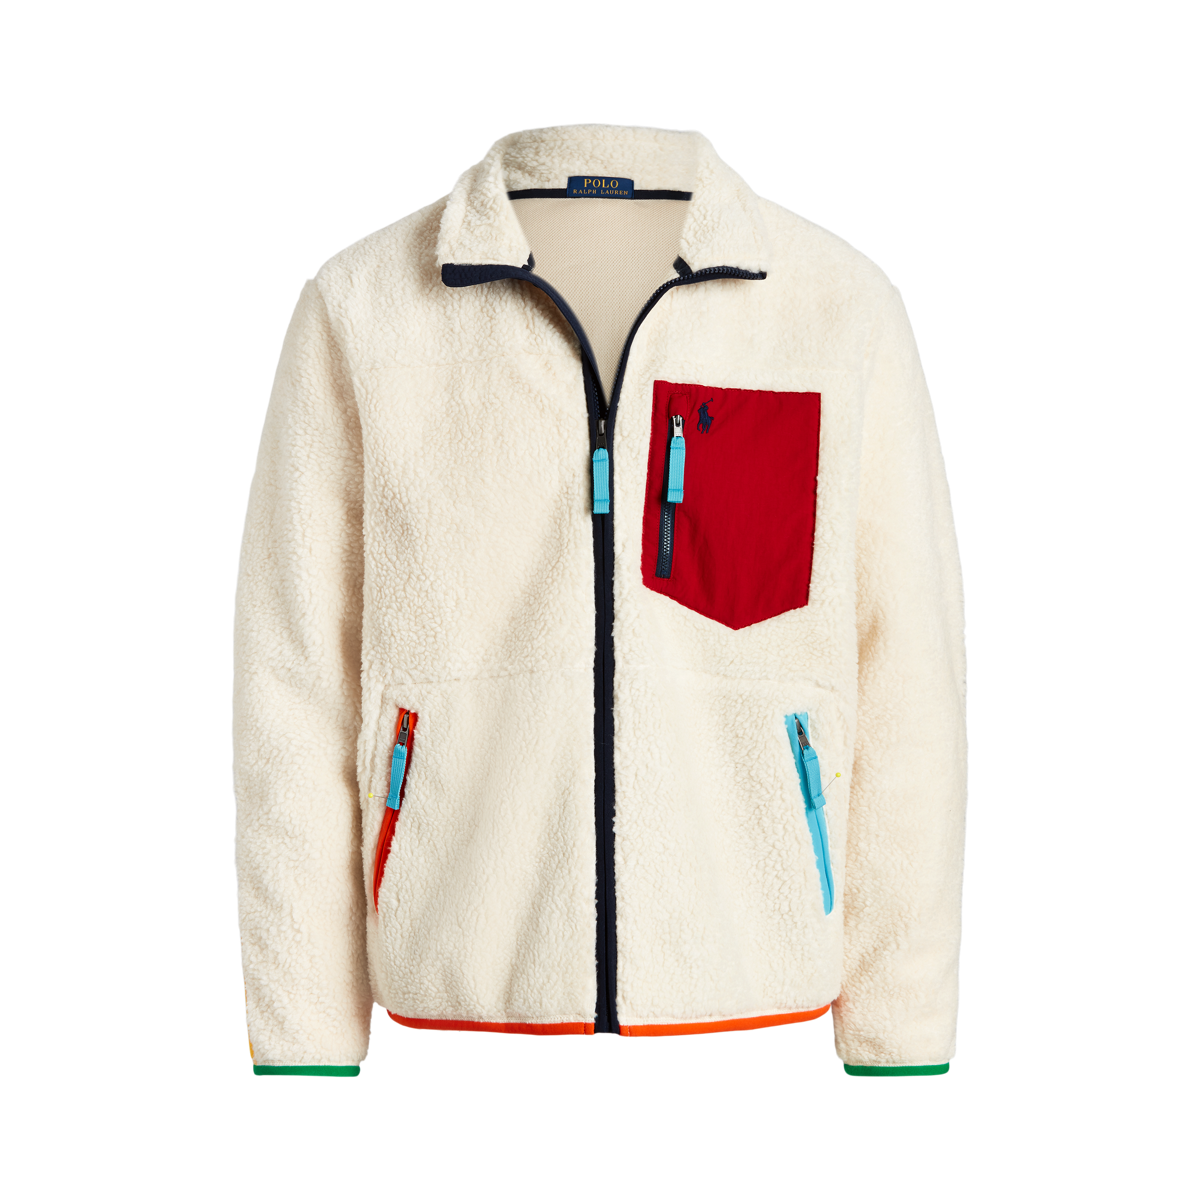 Polo Ralph Lauren Hybrid Fleece Jacket Size S blog.knak.jp